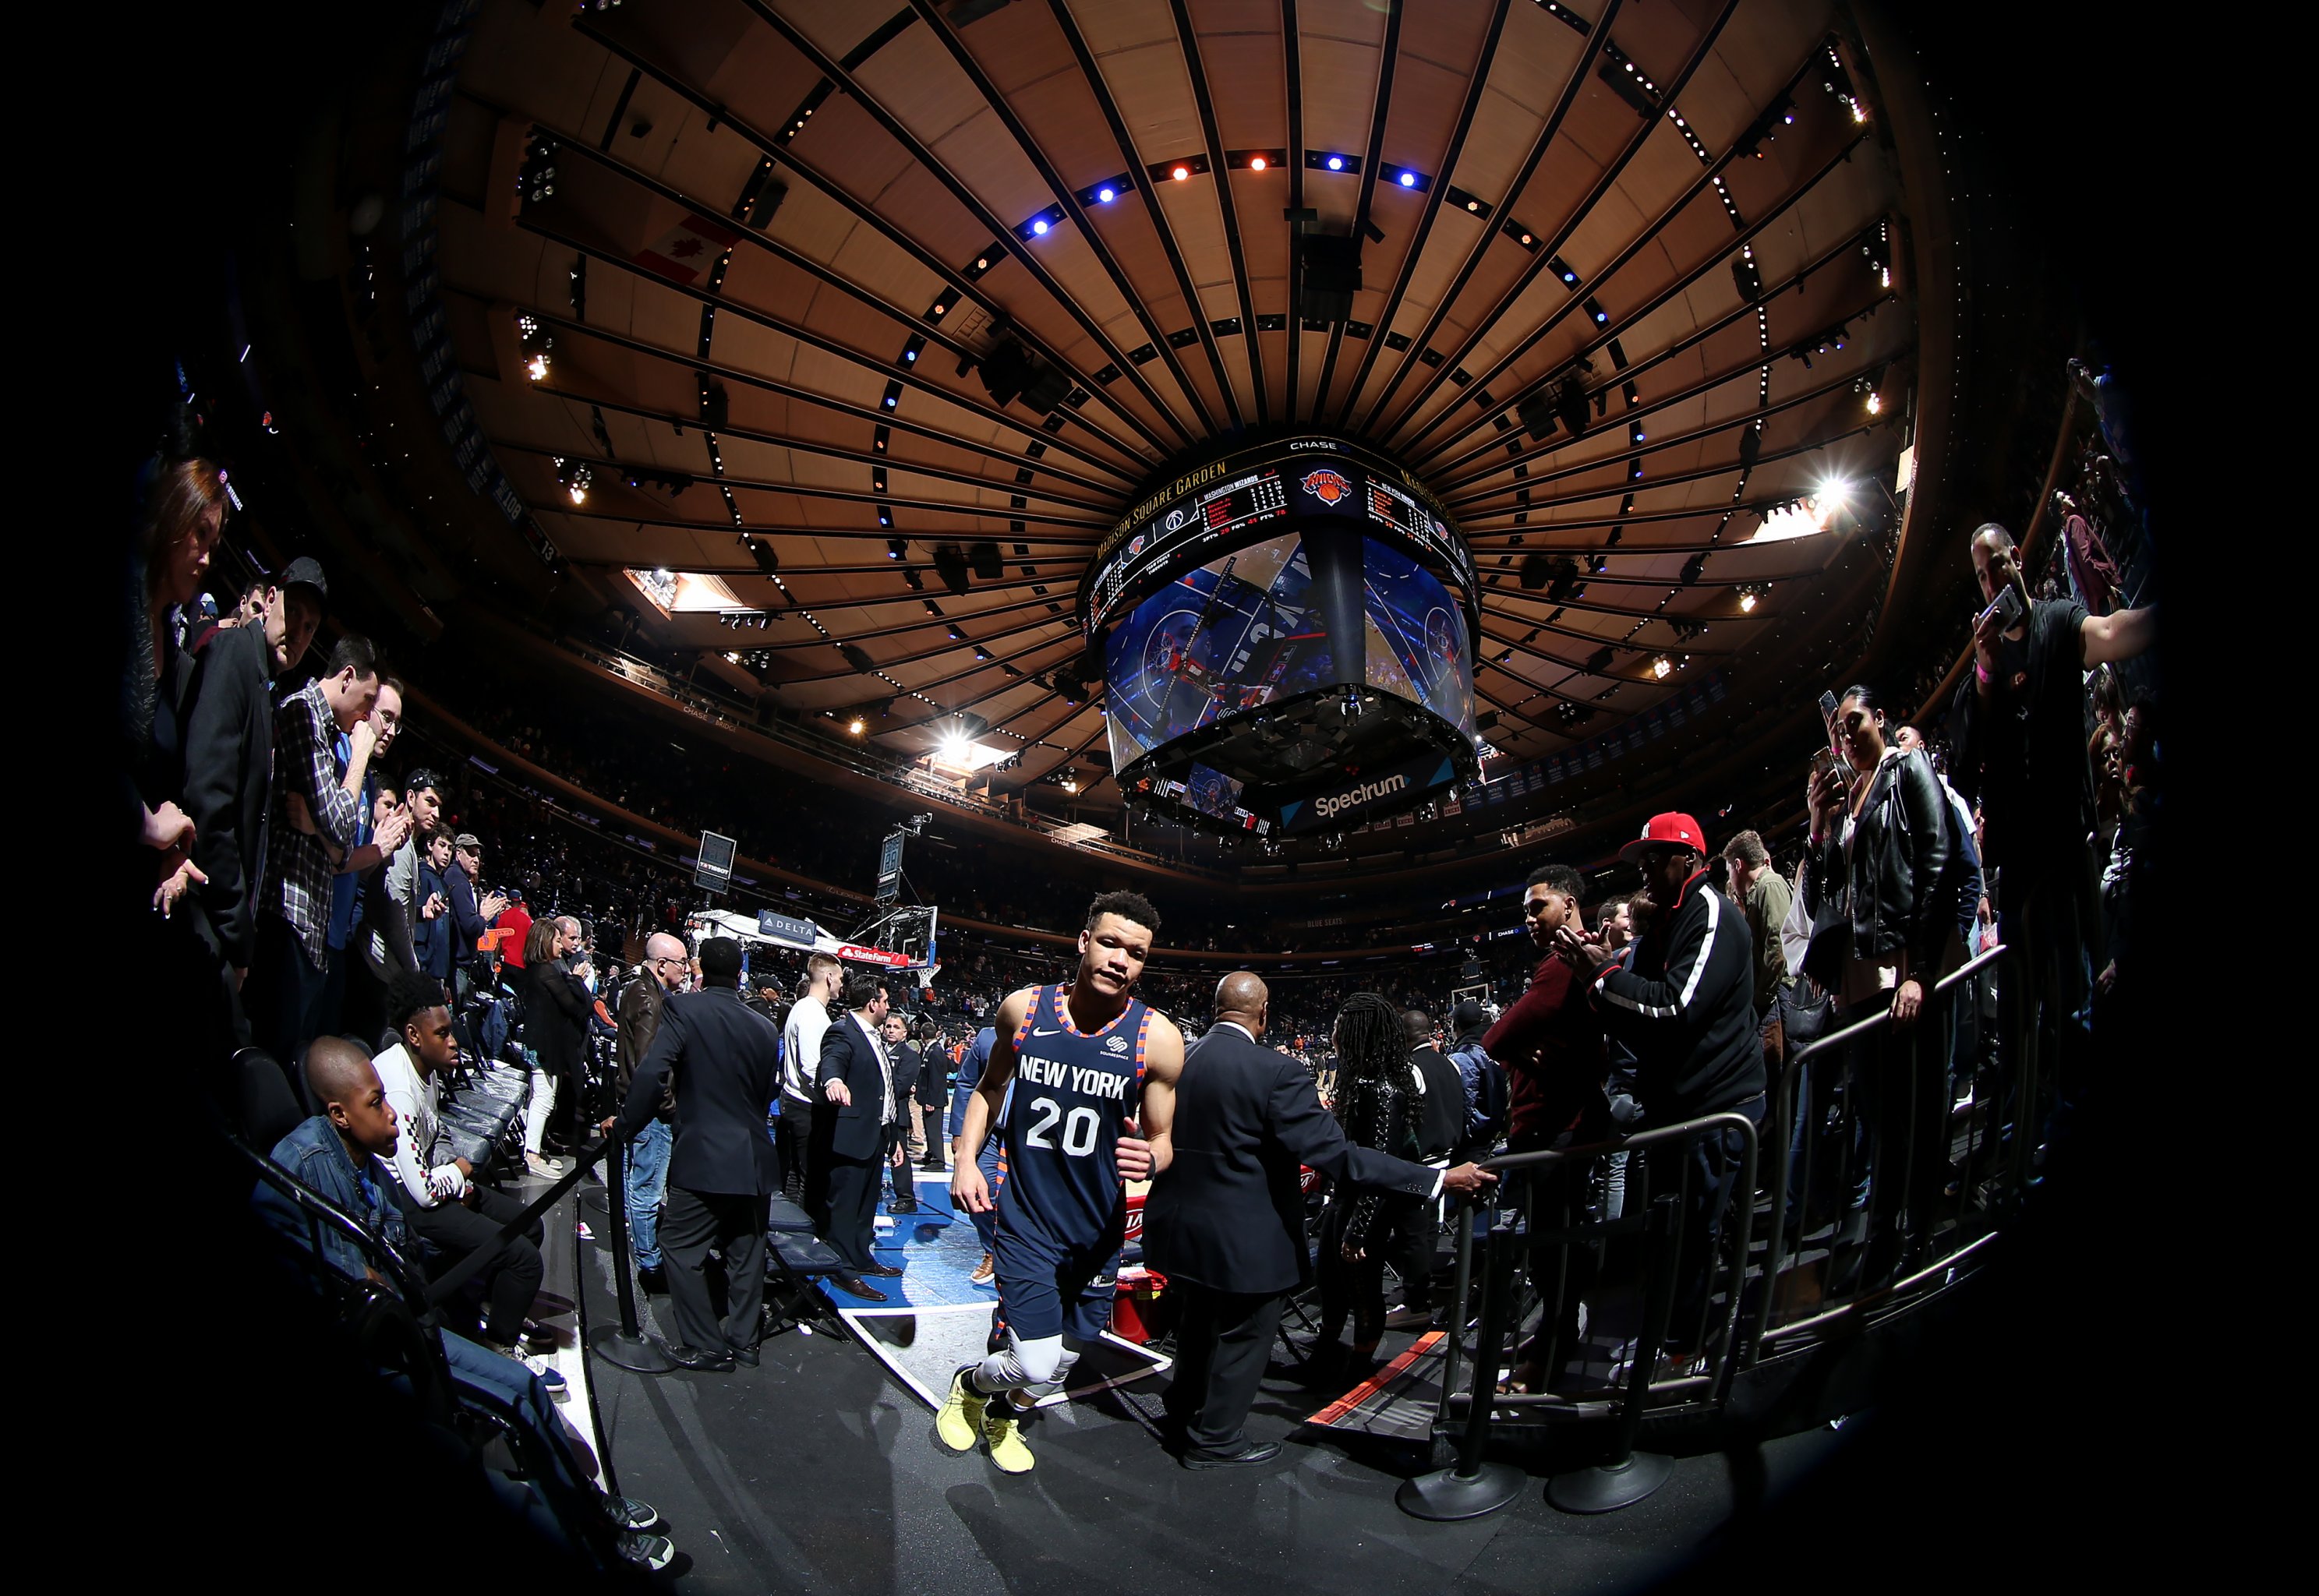 Men New York Knicks Kevin Knox #20 White  